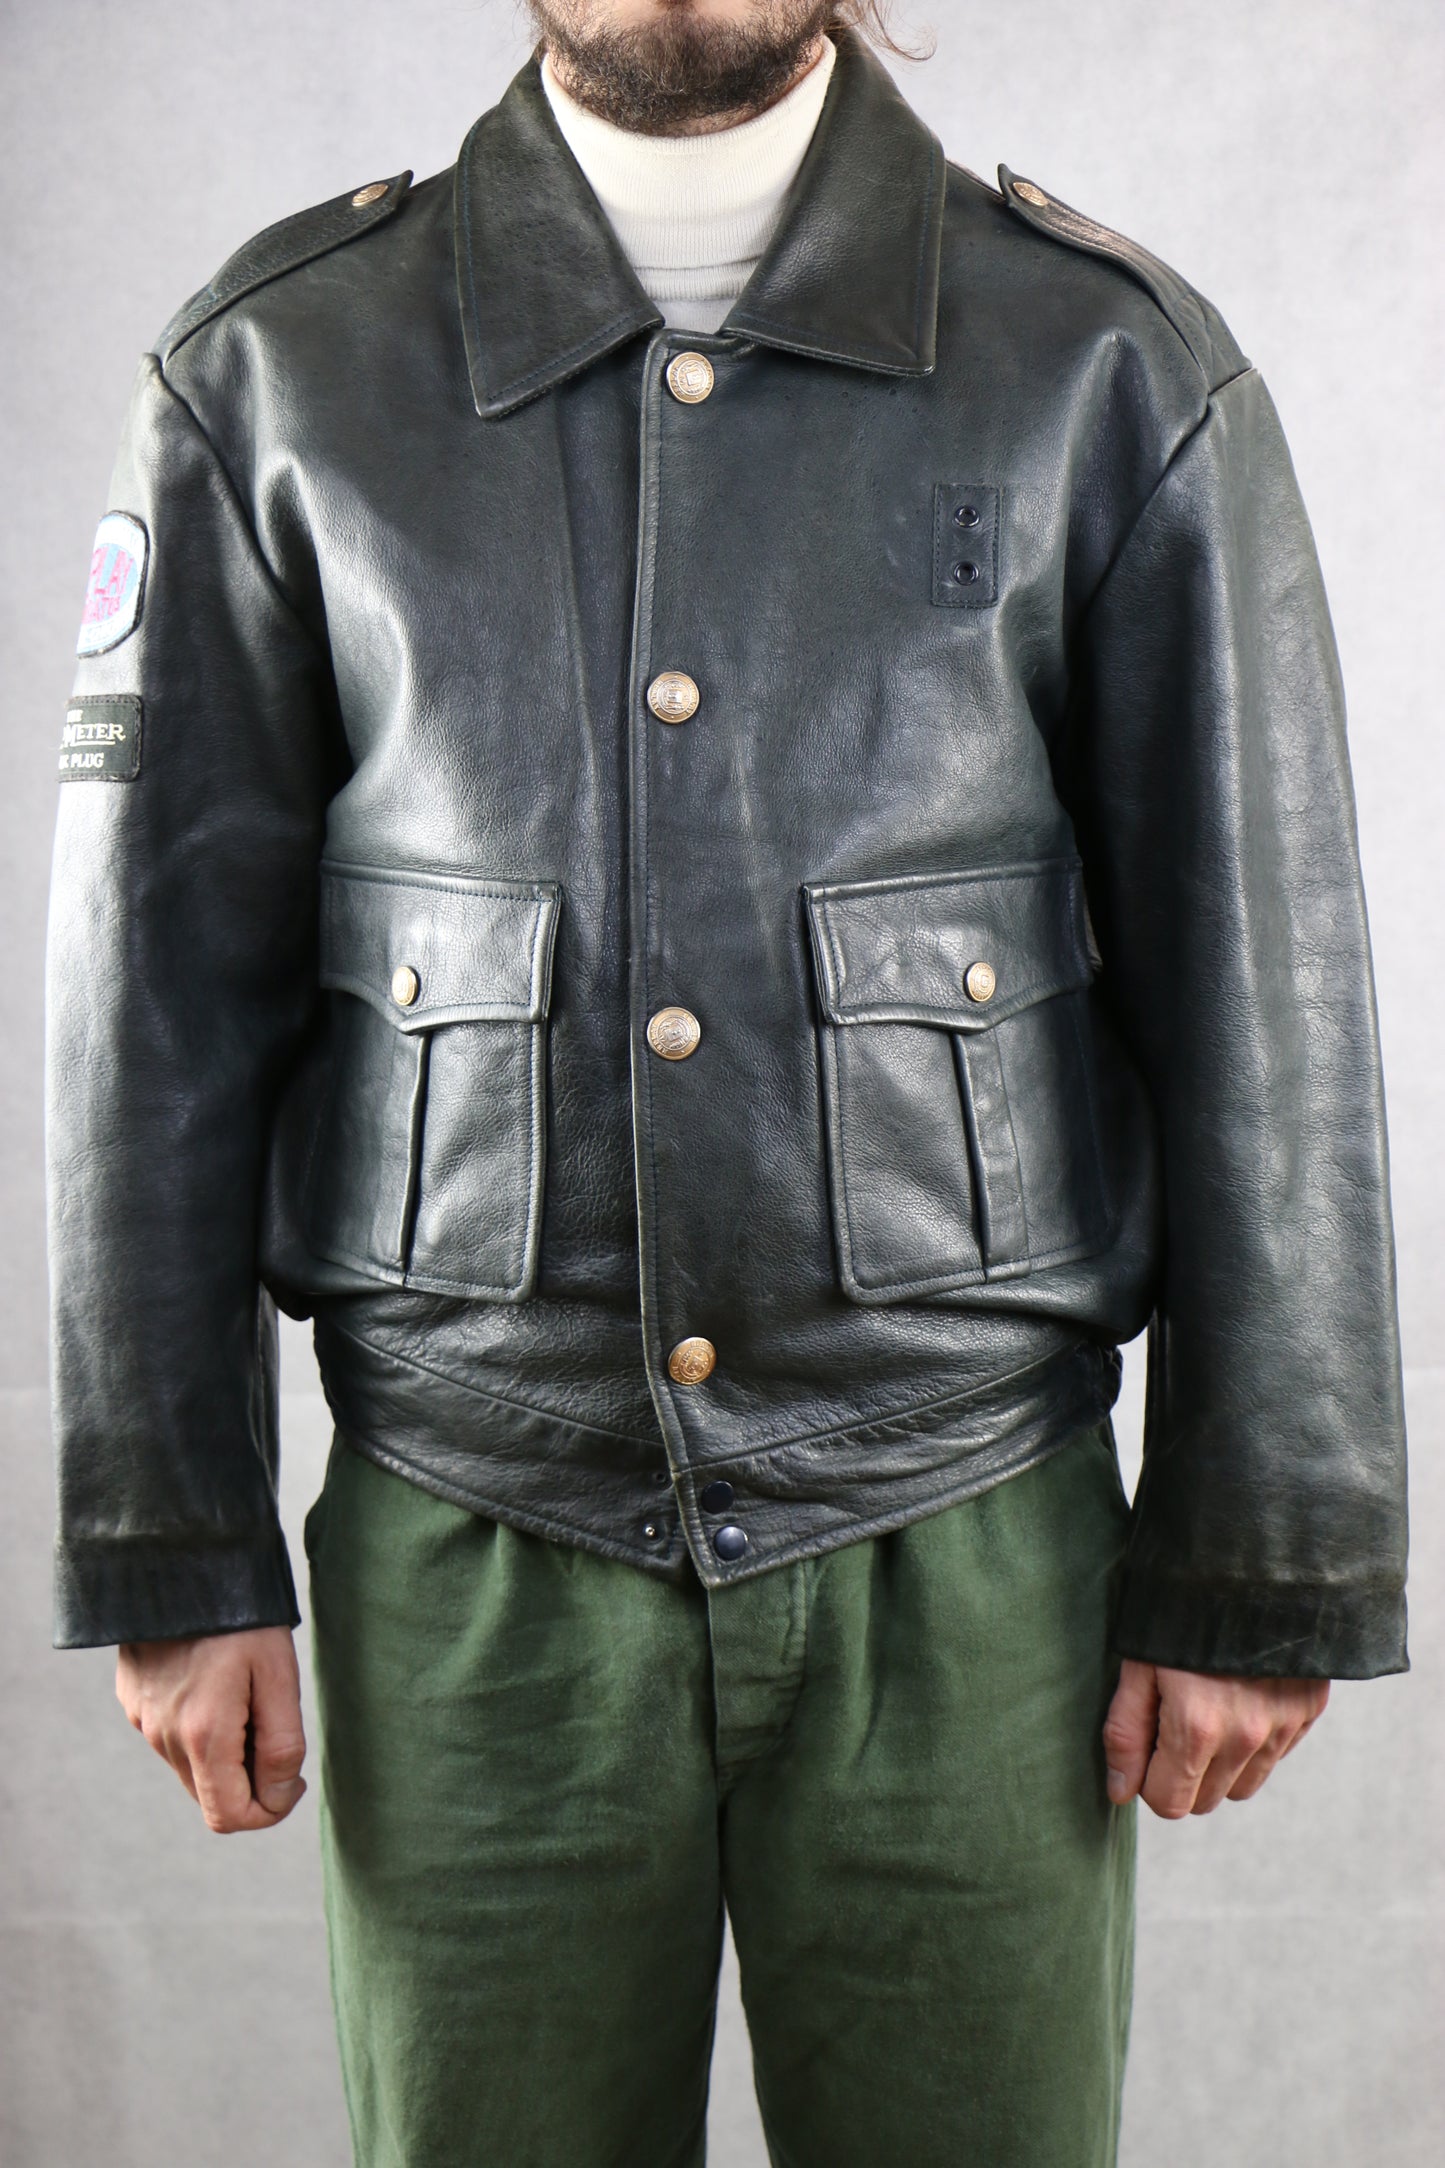 Replay Leather Jacket 1981 - vintage clothing clochard92.com